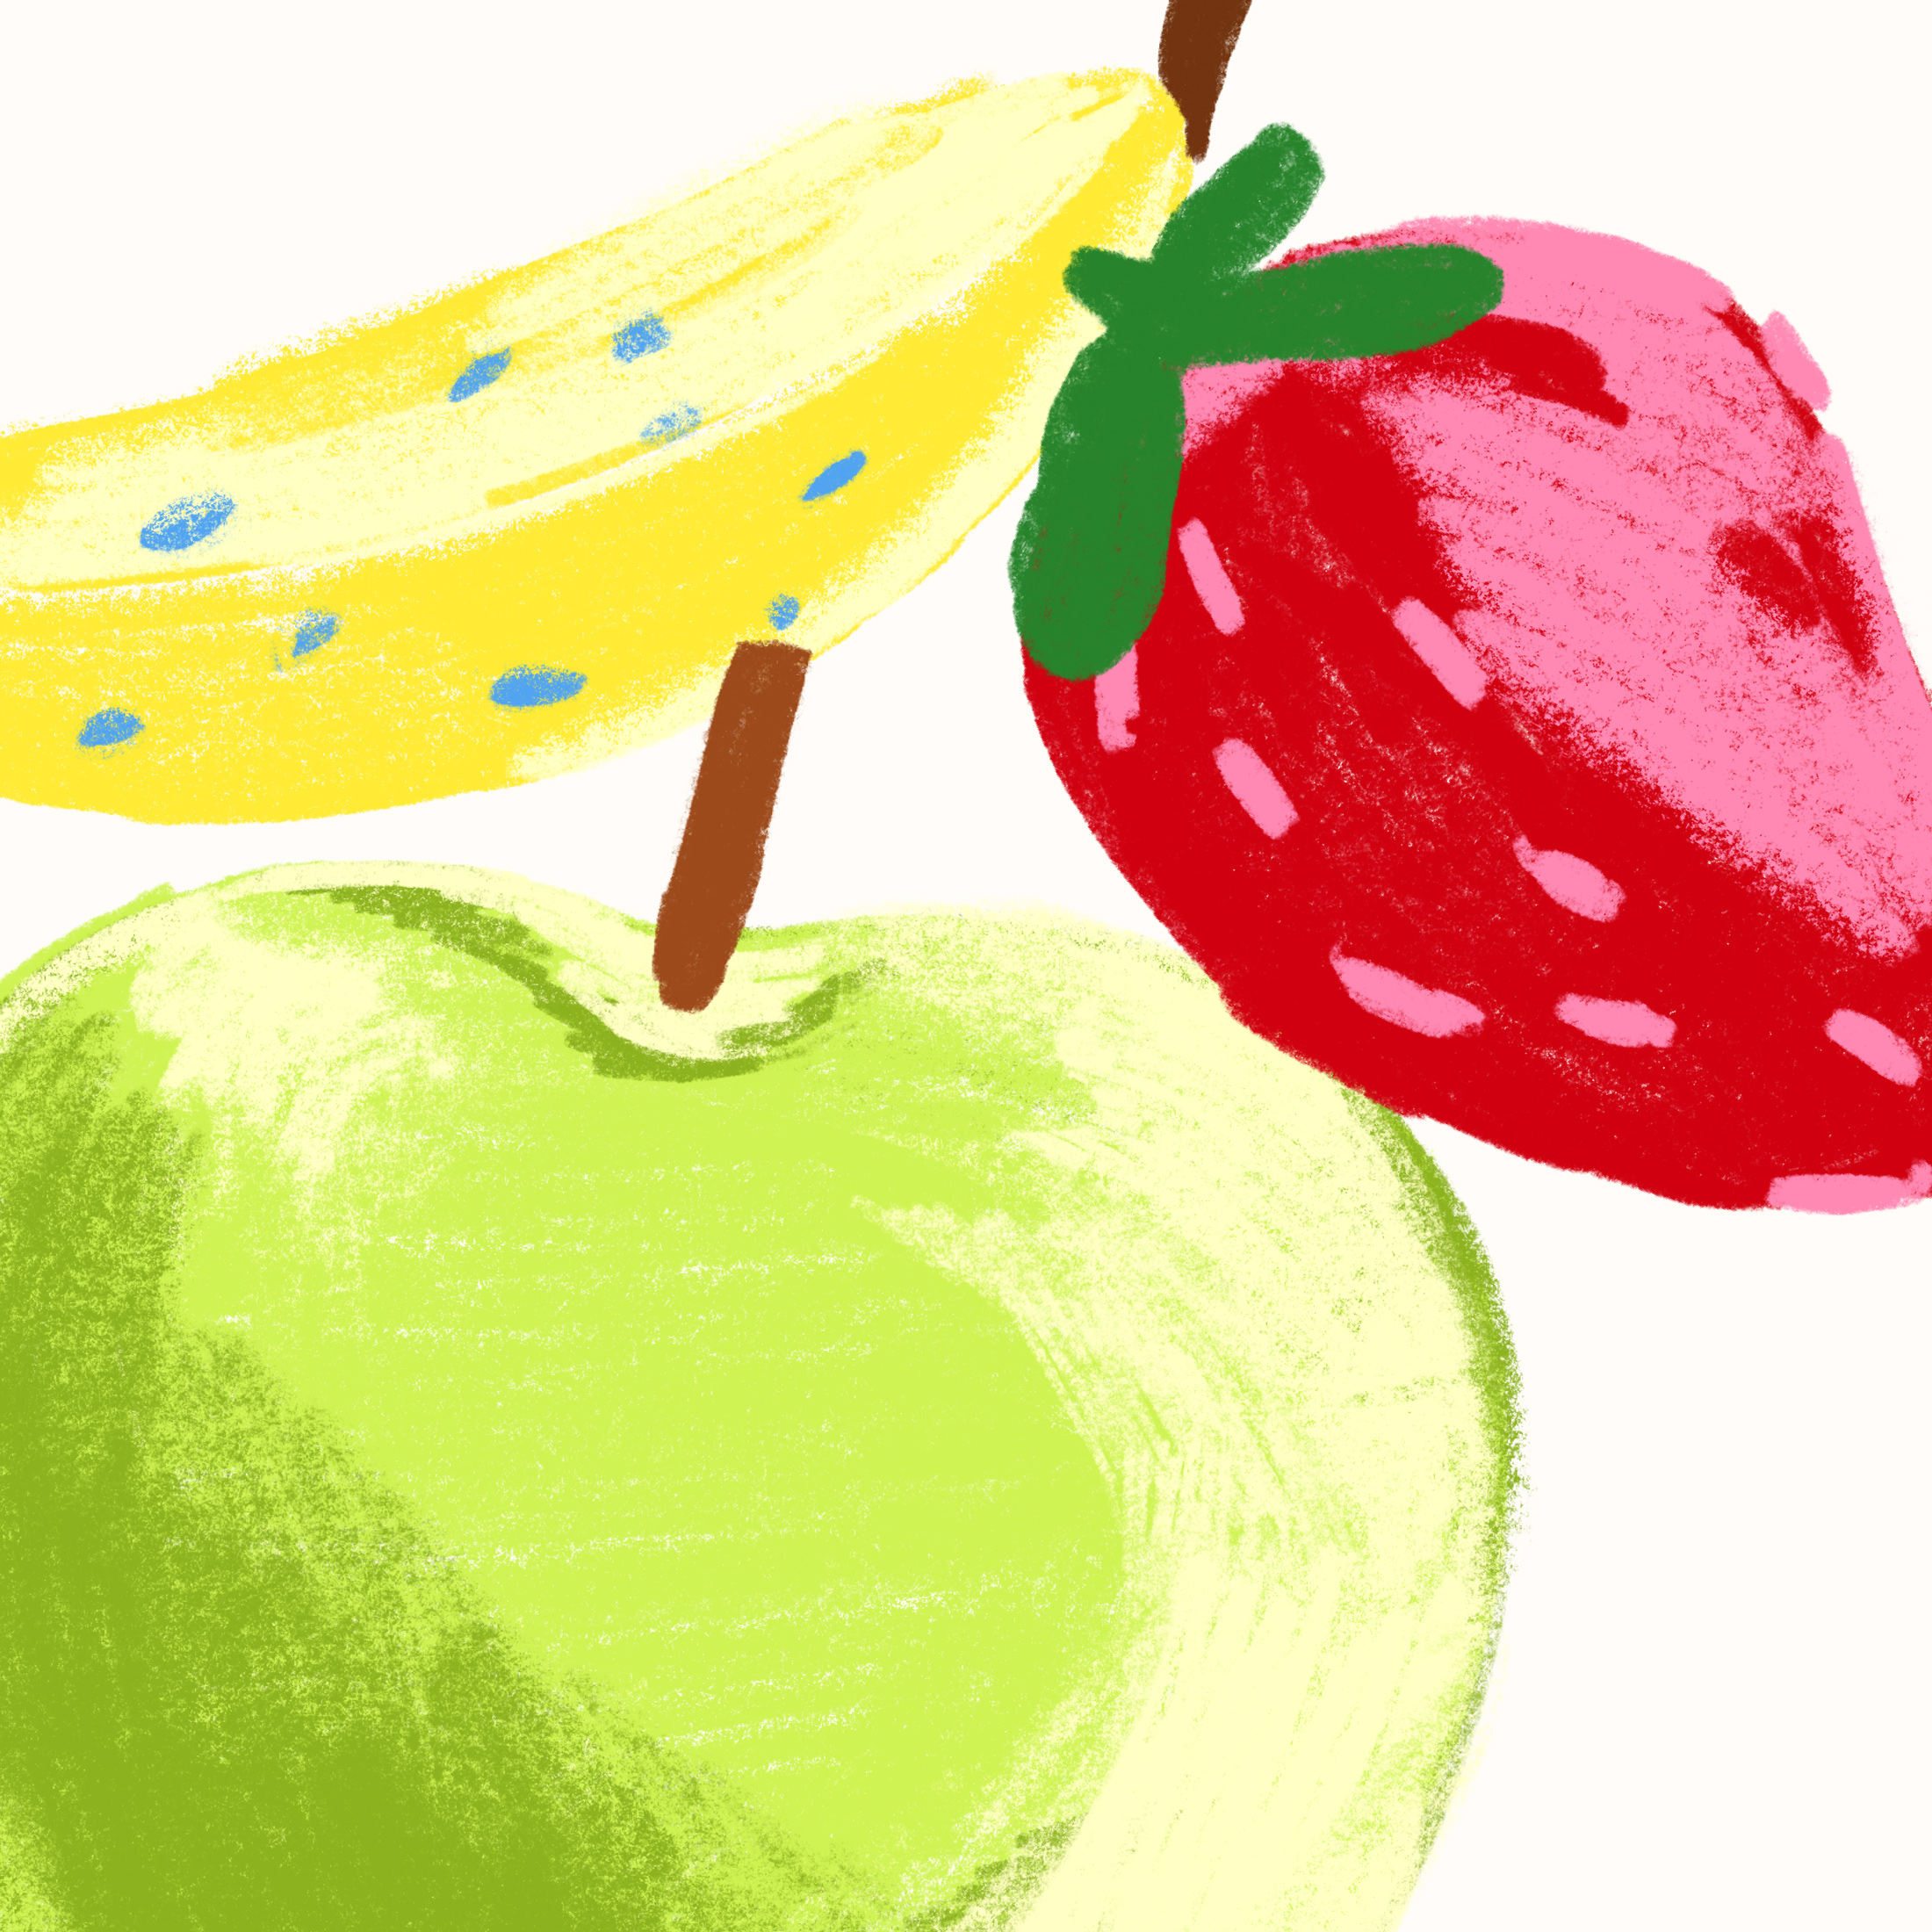 HW-Fruit-close-up